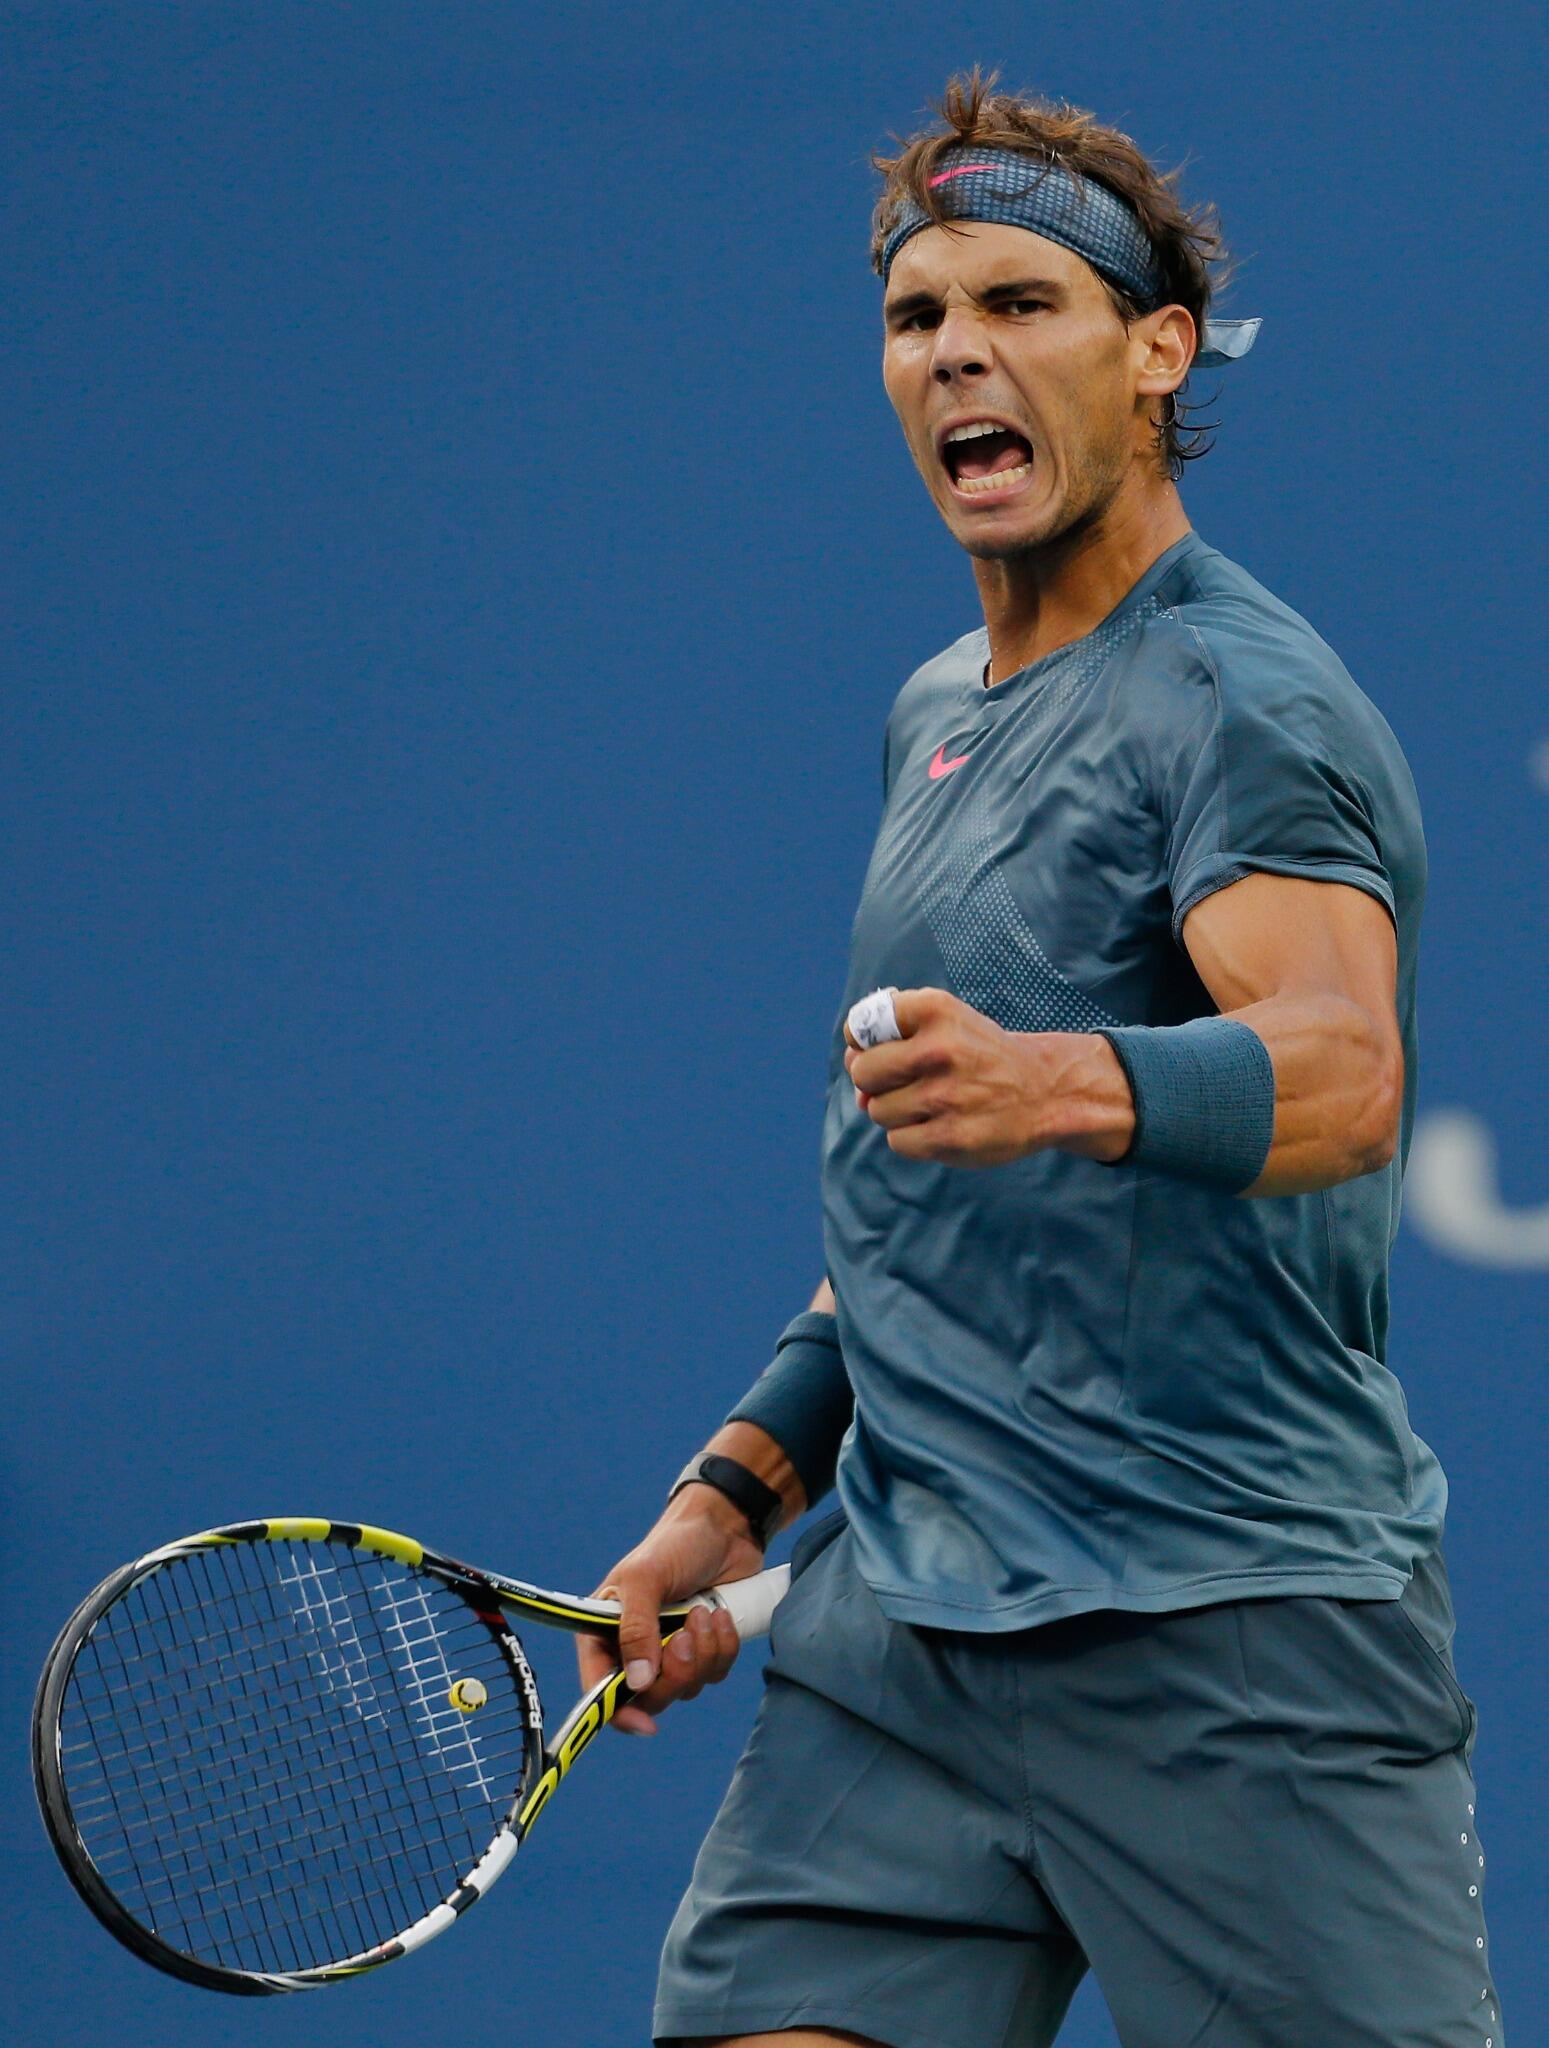 Rafael Nadal in the 2013 US Open